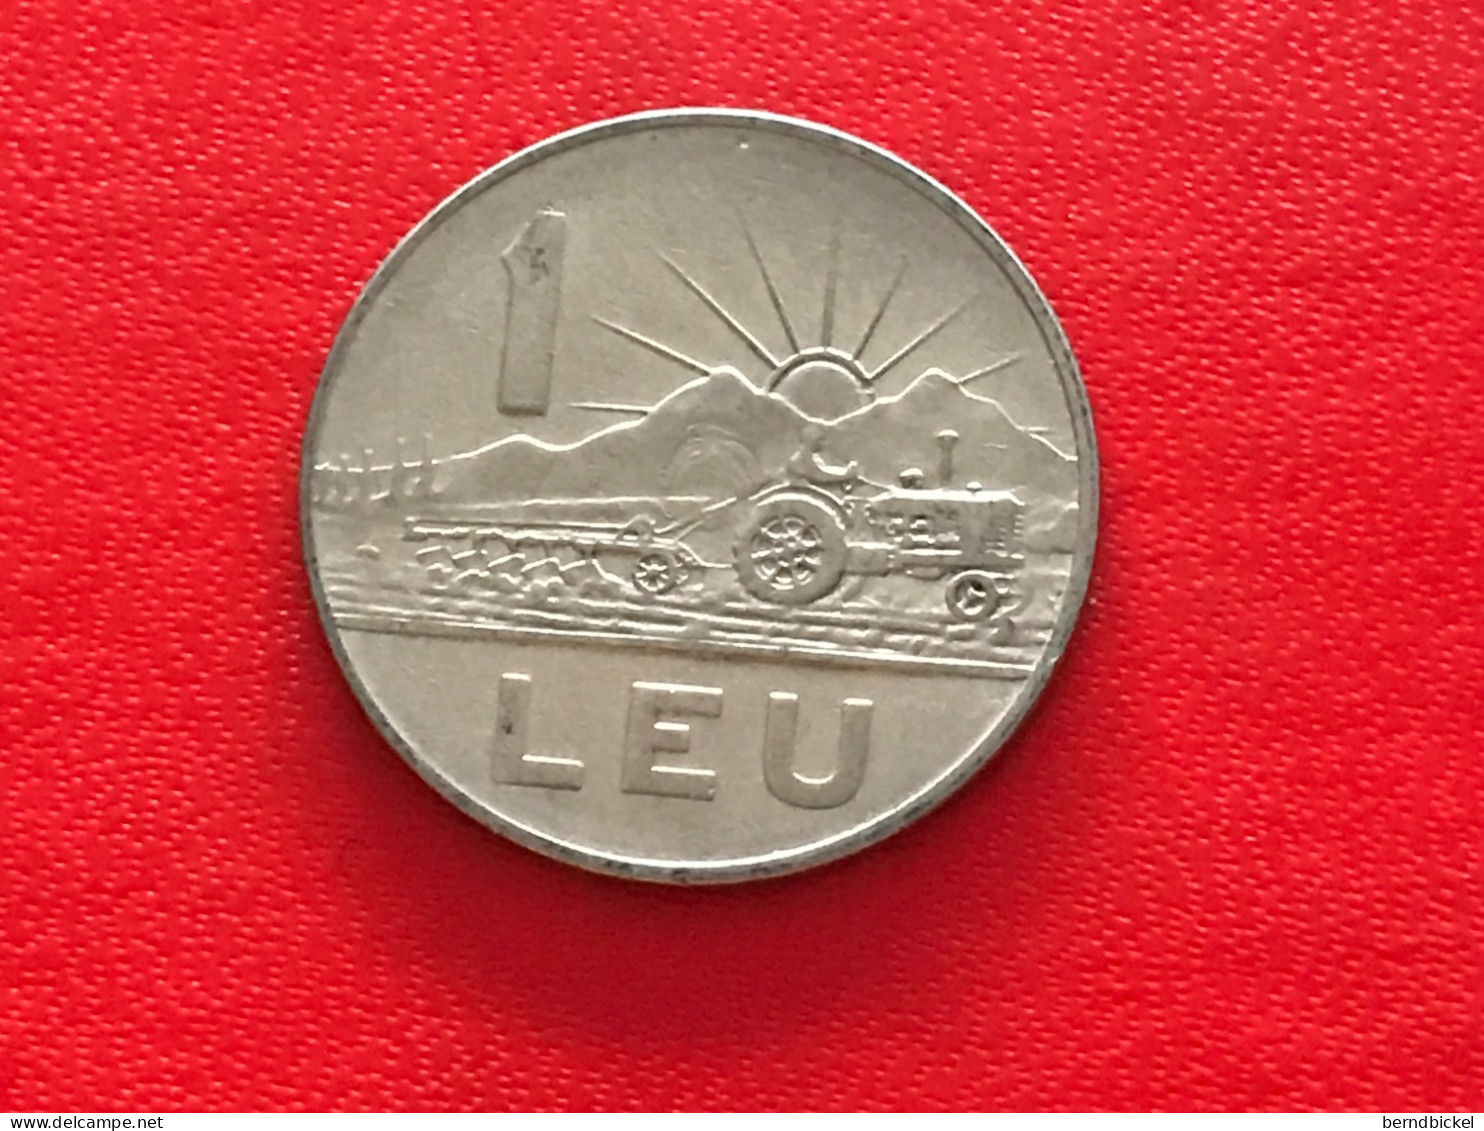 Münze Münzen Umlaufmünze Rumänien 1 Leu 1966 - Rumänien